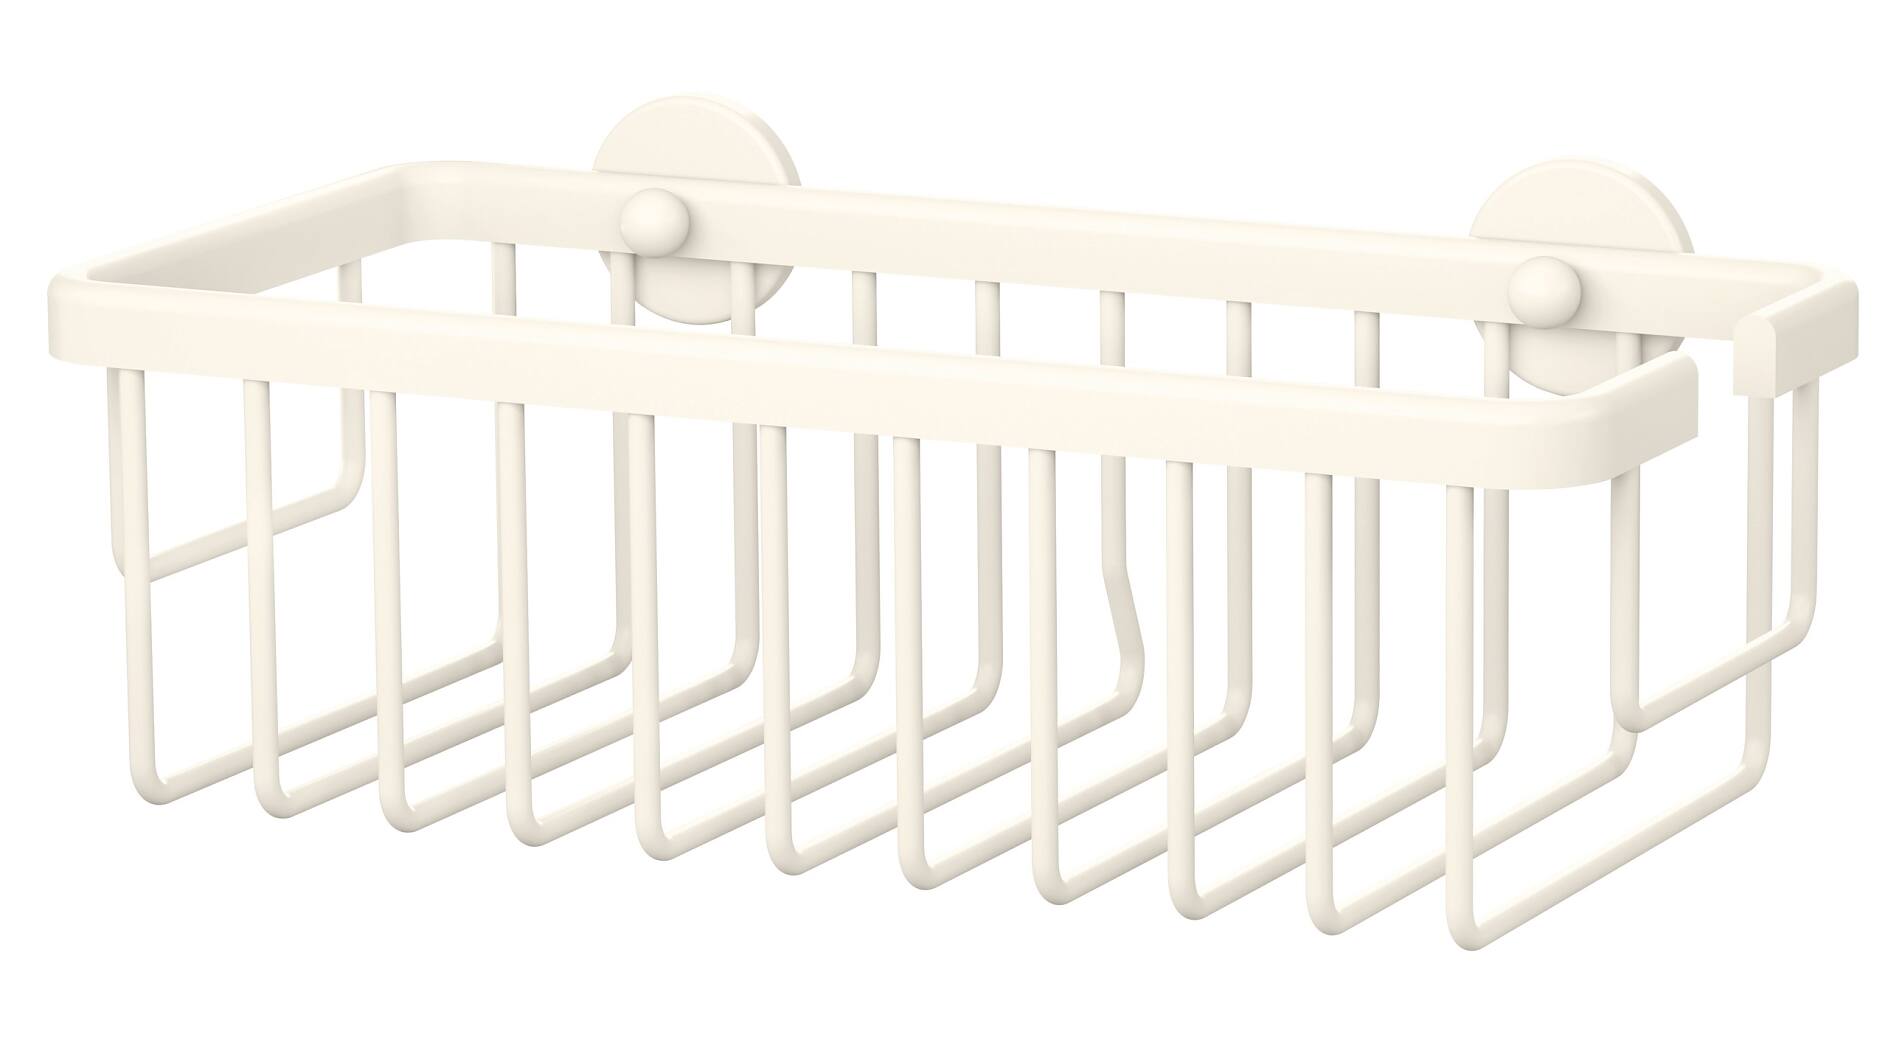 Corner shower rack plastic white shower suction cup rack suitable